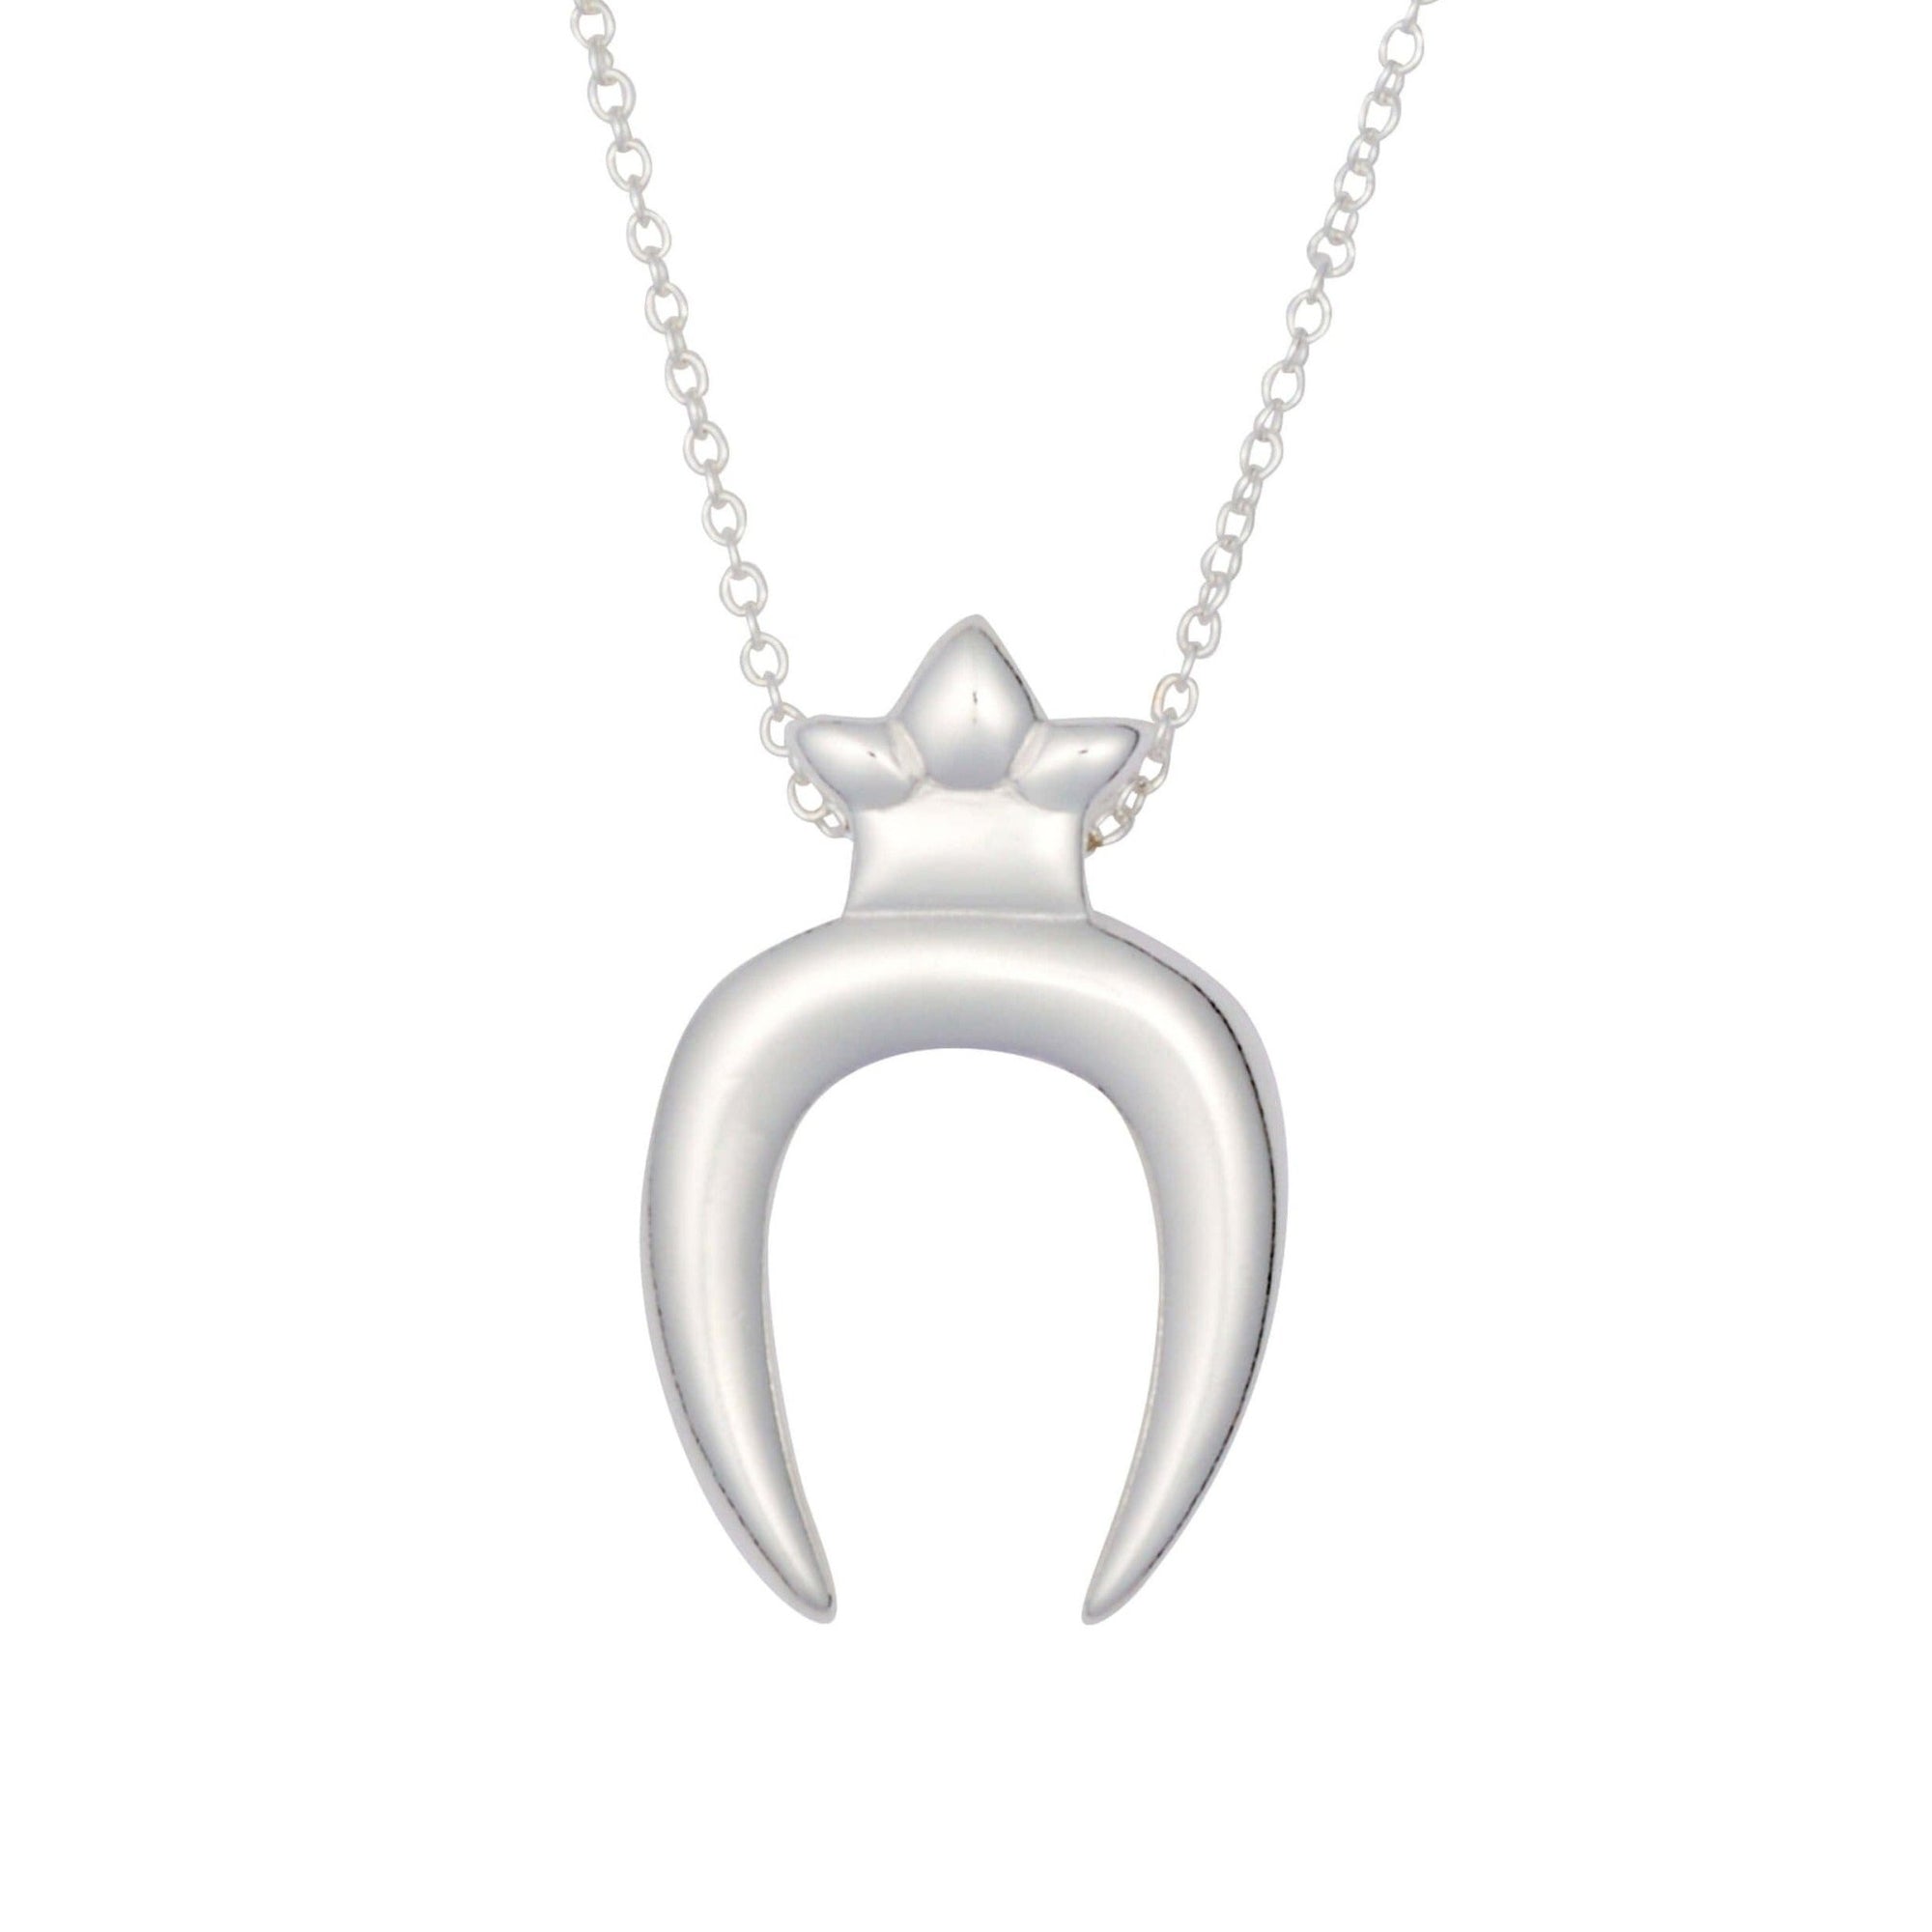 Astarte pendant silver - Armed Jewels 